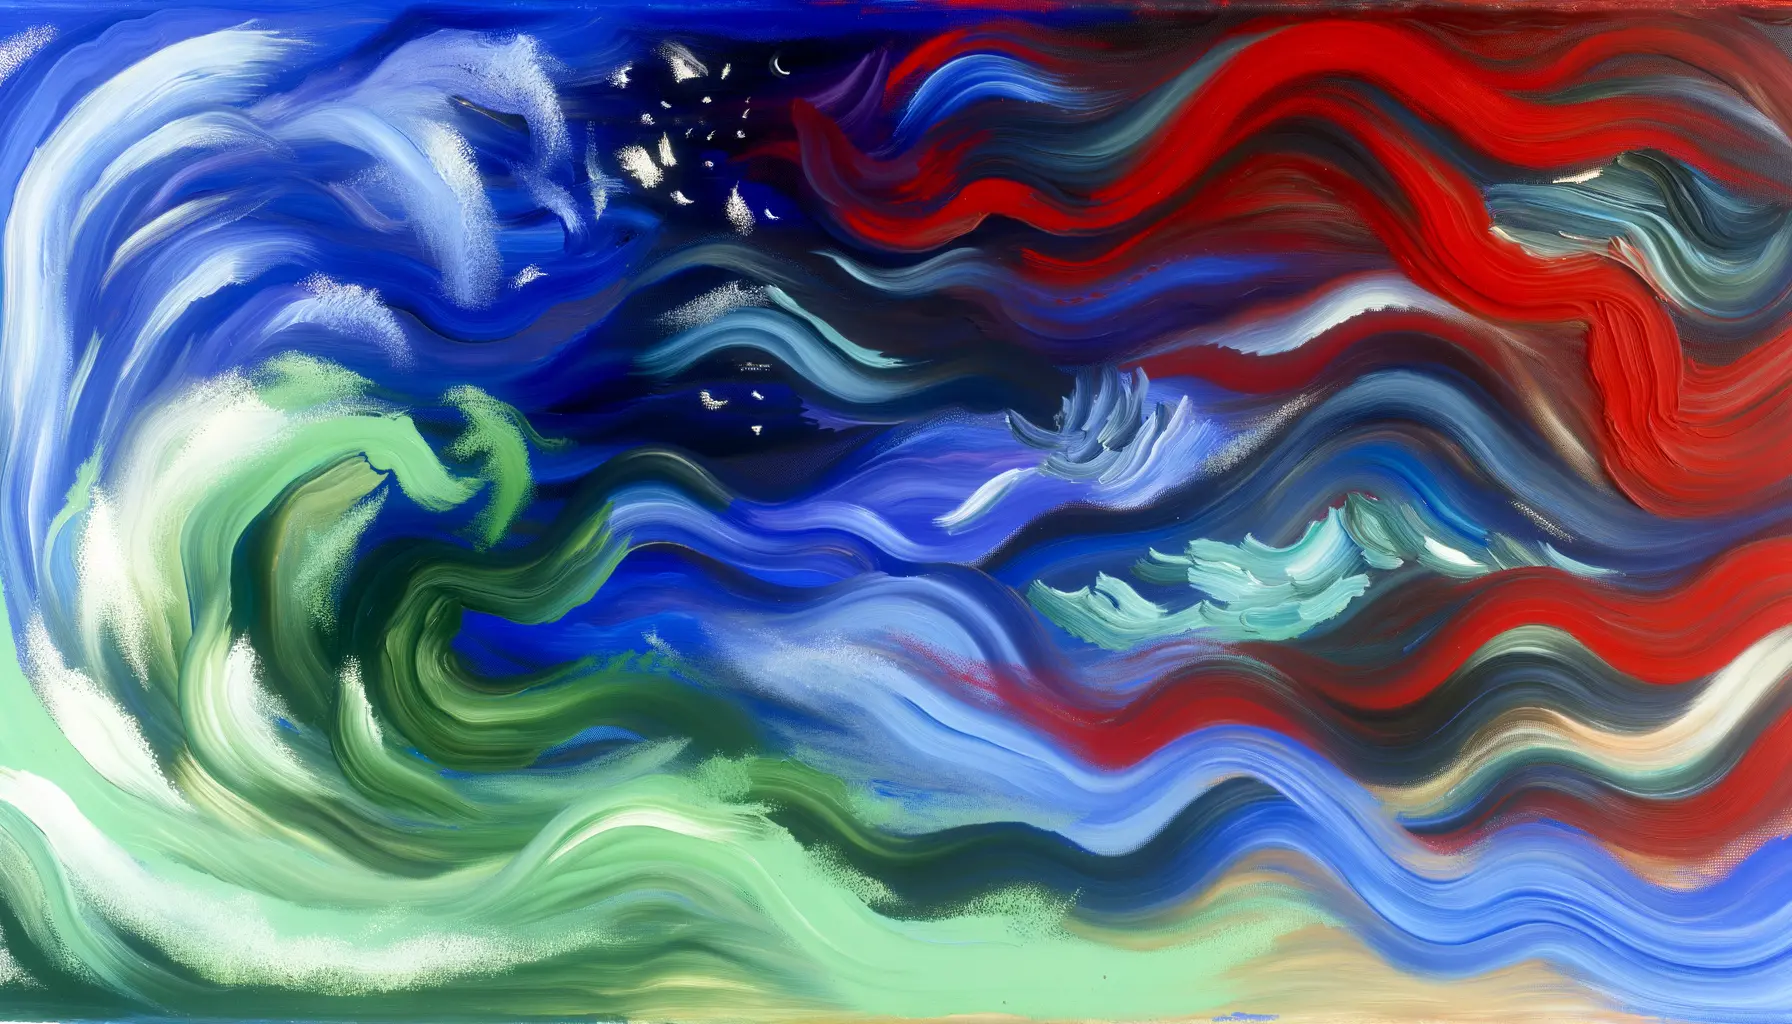 Abstraktes Gemälde, das innere Turbulenz darstellt